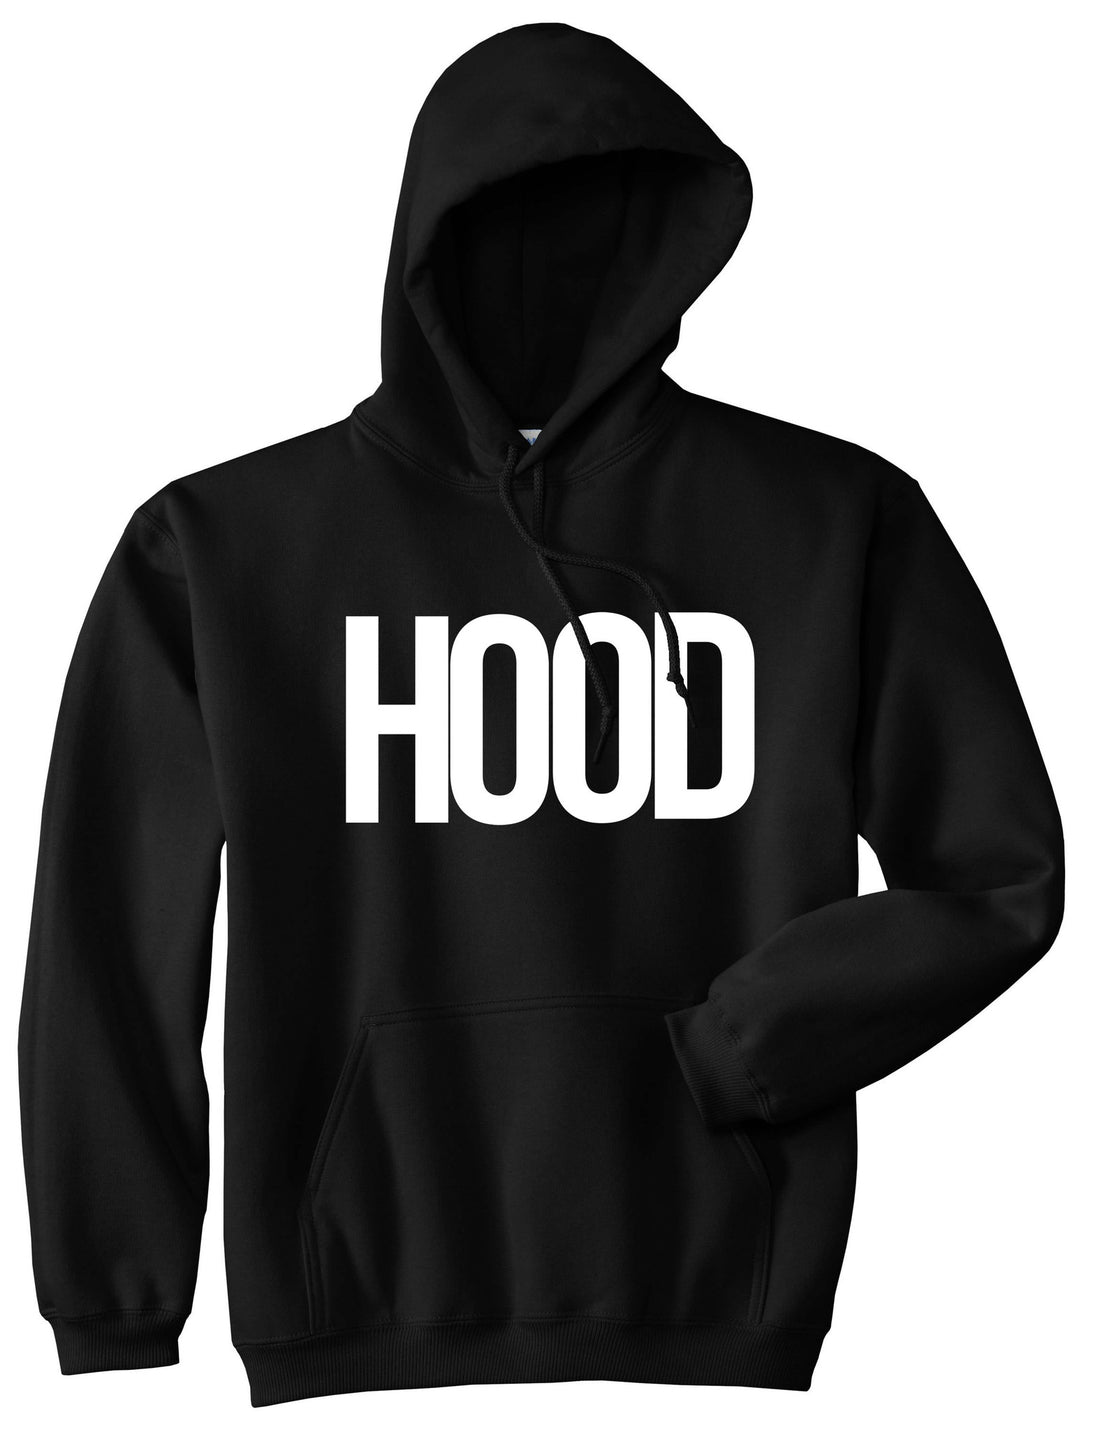 Hood Trap Style Compton New York Air Boys Kids Pullover Hoodie Hoody In Black by Kings Of NY